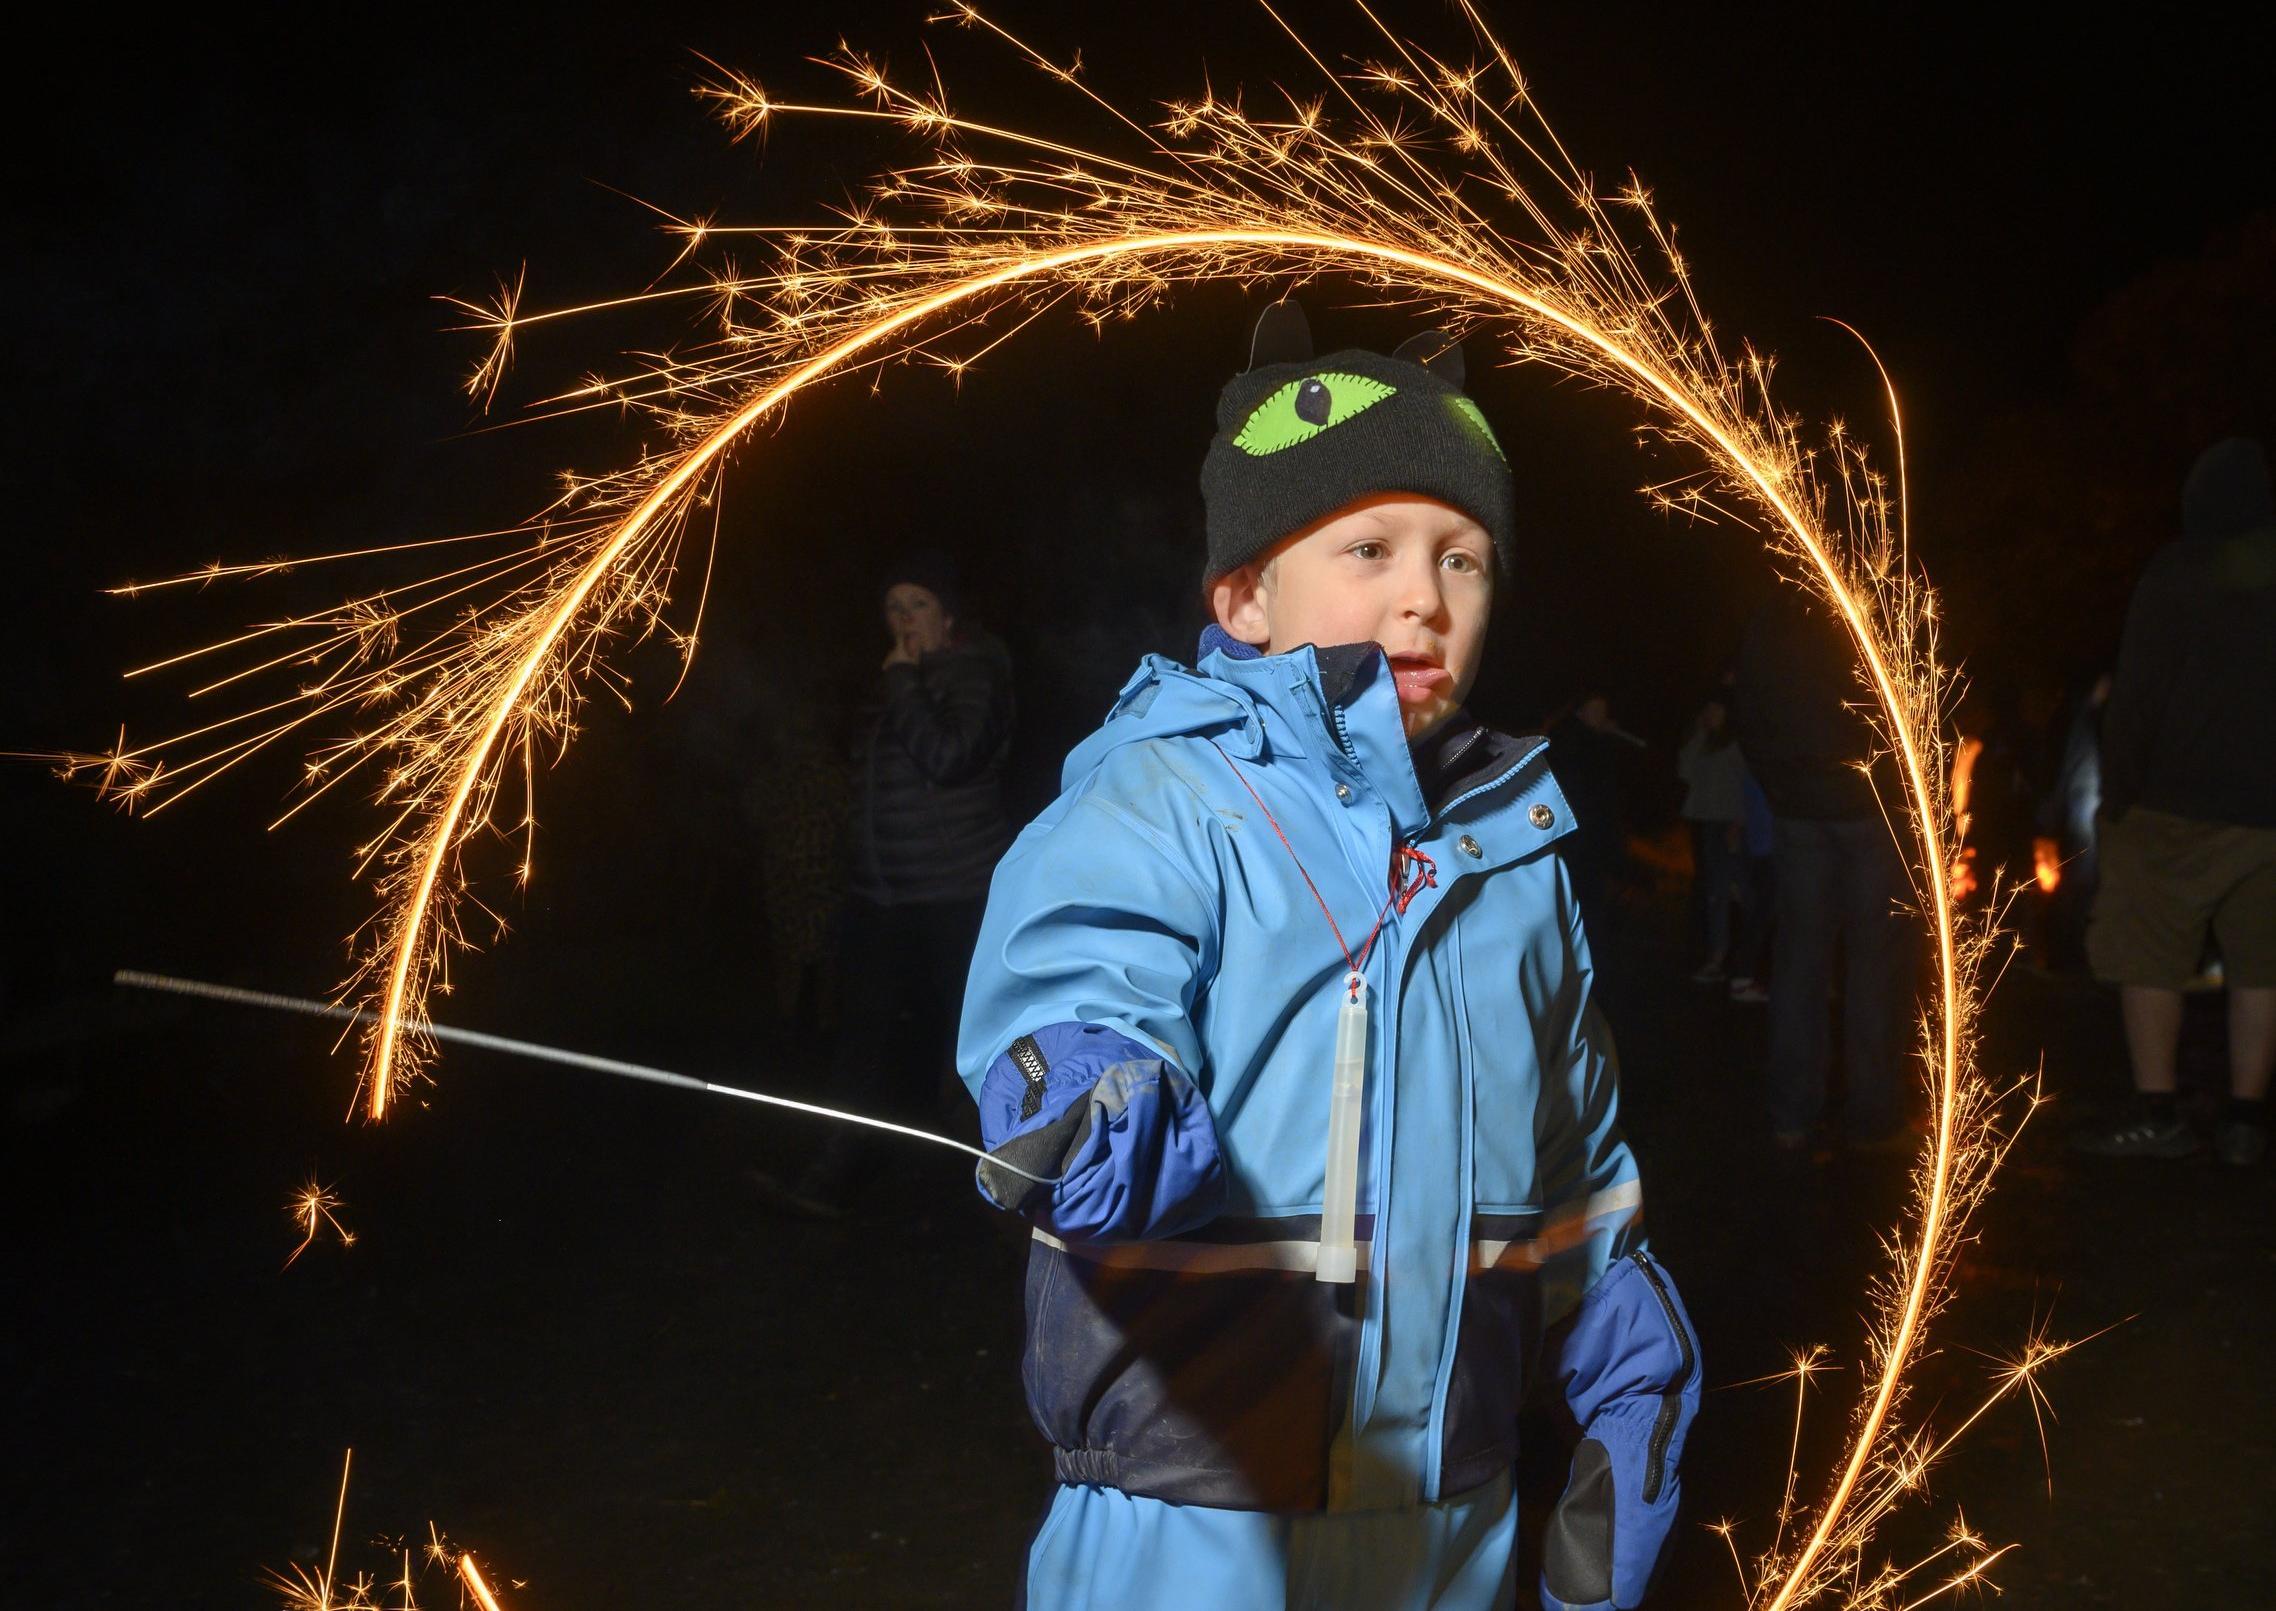 Lauder fireworks display 2019

Tom Matthews with a sparkler.

Pic Phil Wilkinson 
info@philspix.com